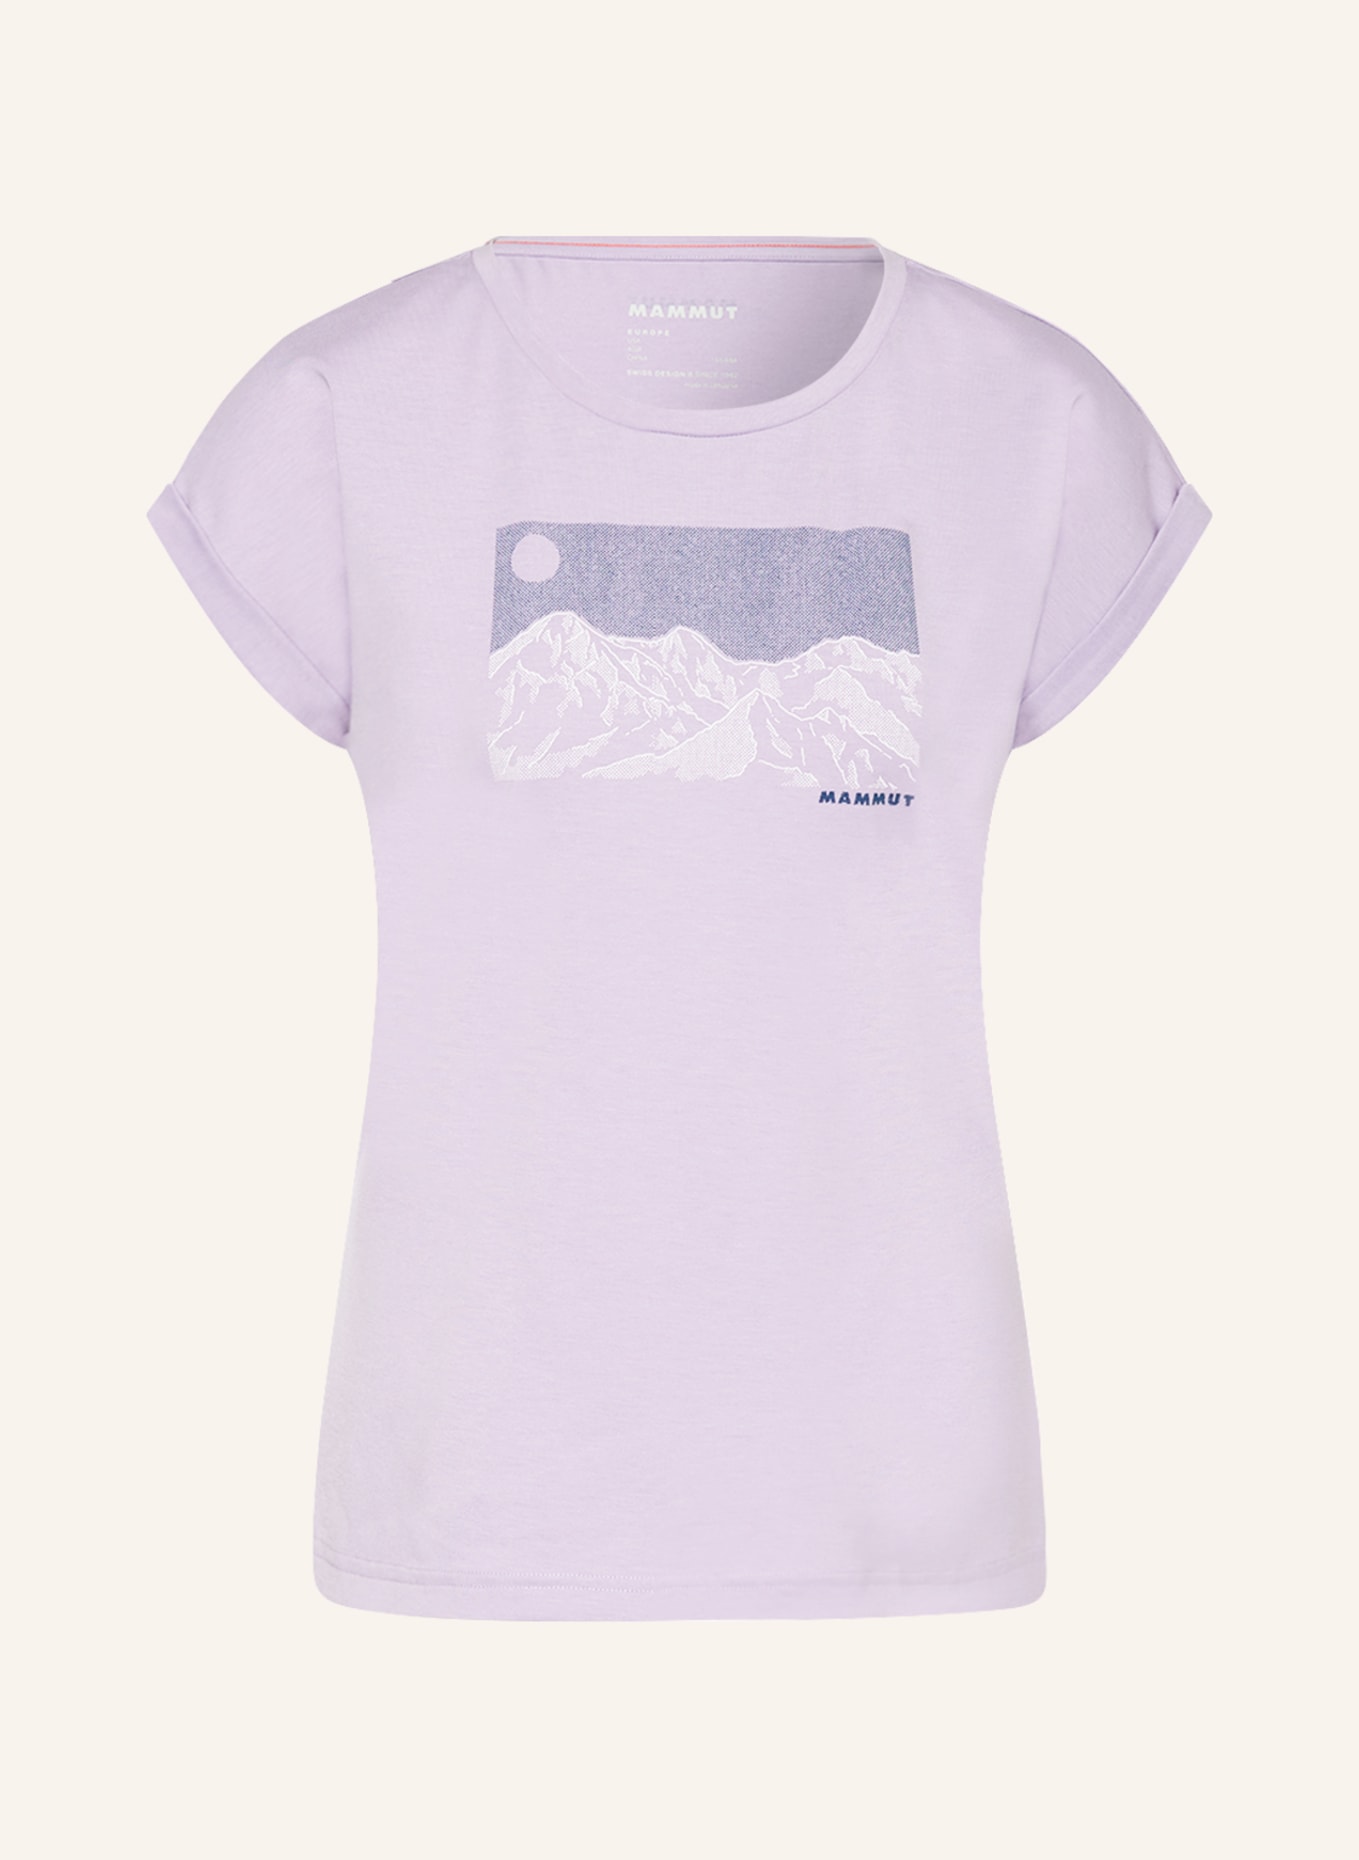 MAMMUT T-Shirt MOUNTAIN TRILOGY mit UV-Schutz 50+, Farbe: HELLLILA/ DUNKELLILA/ WEISS (Bild 1)